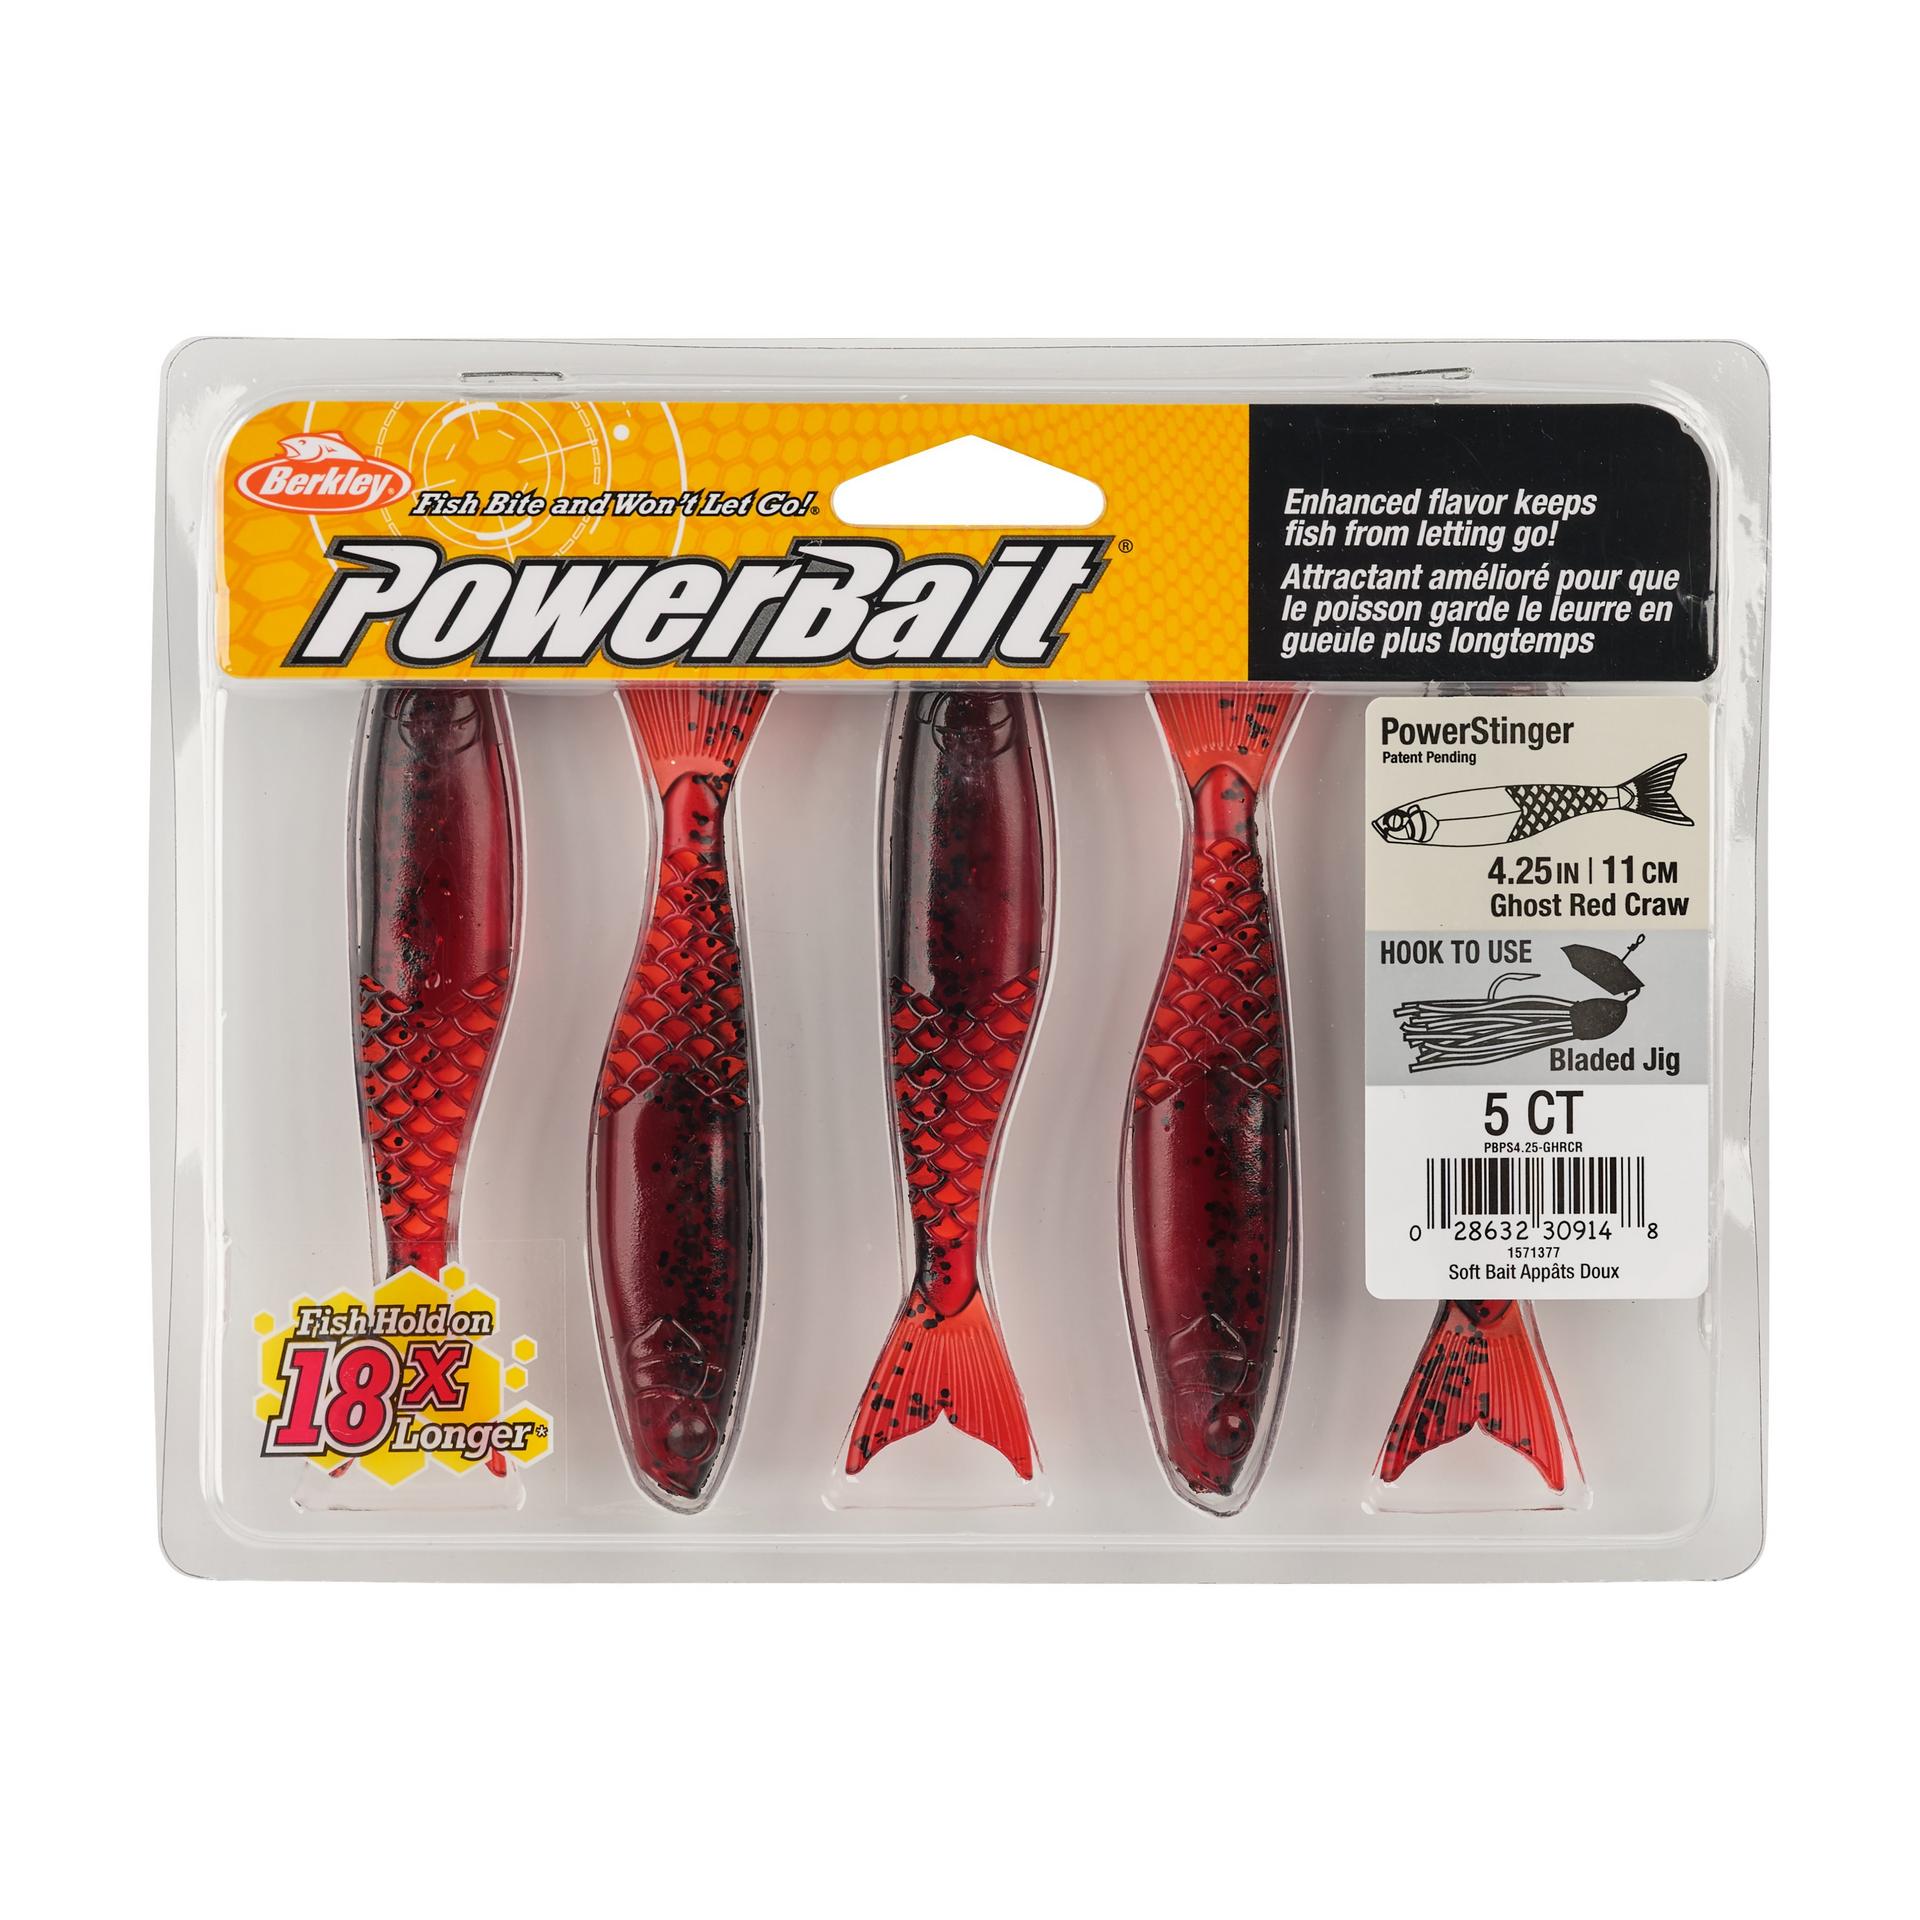 Berkley PowerBaitPowerStinger 4.25 GhostRedCraw PKG | Berkley Fishing